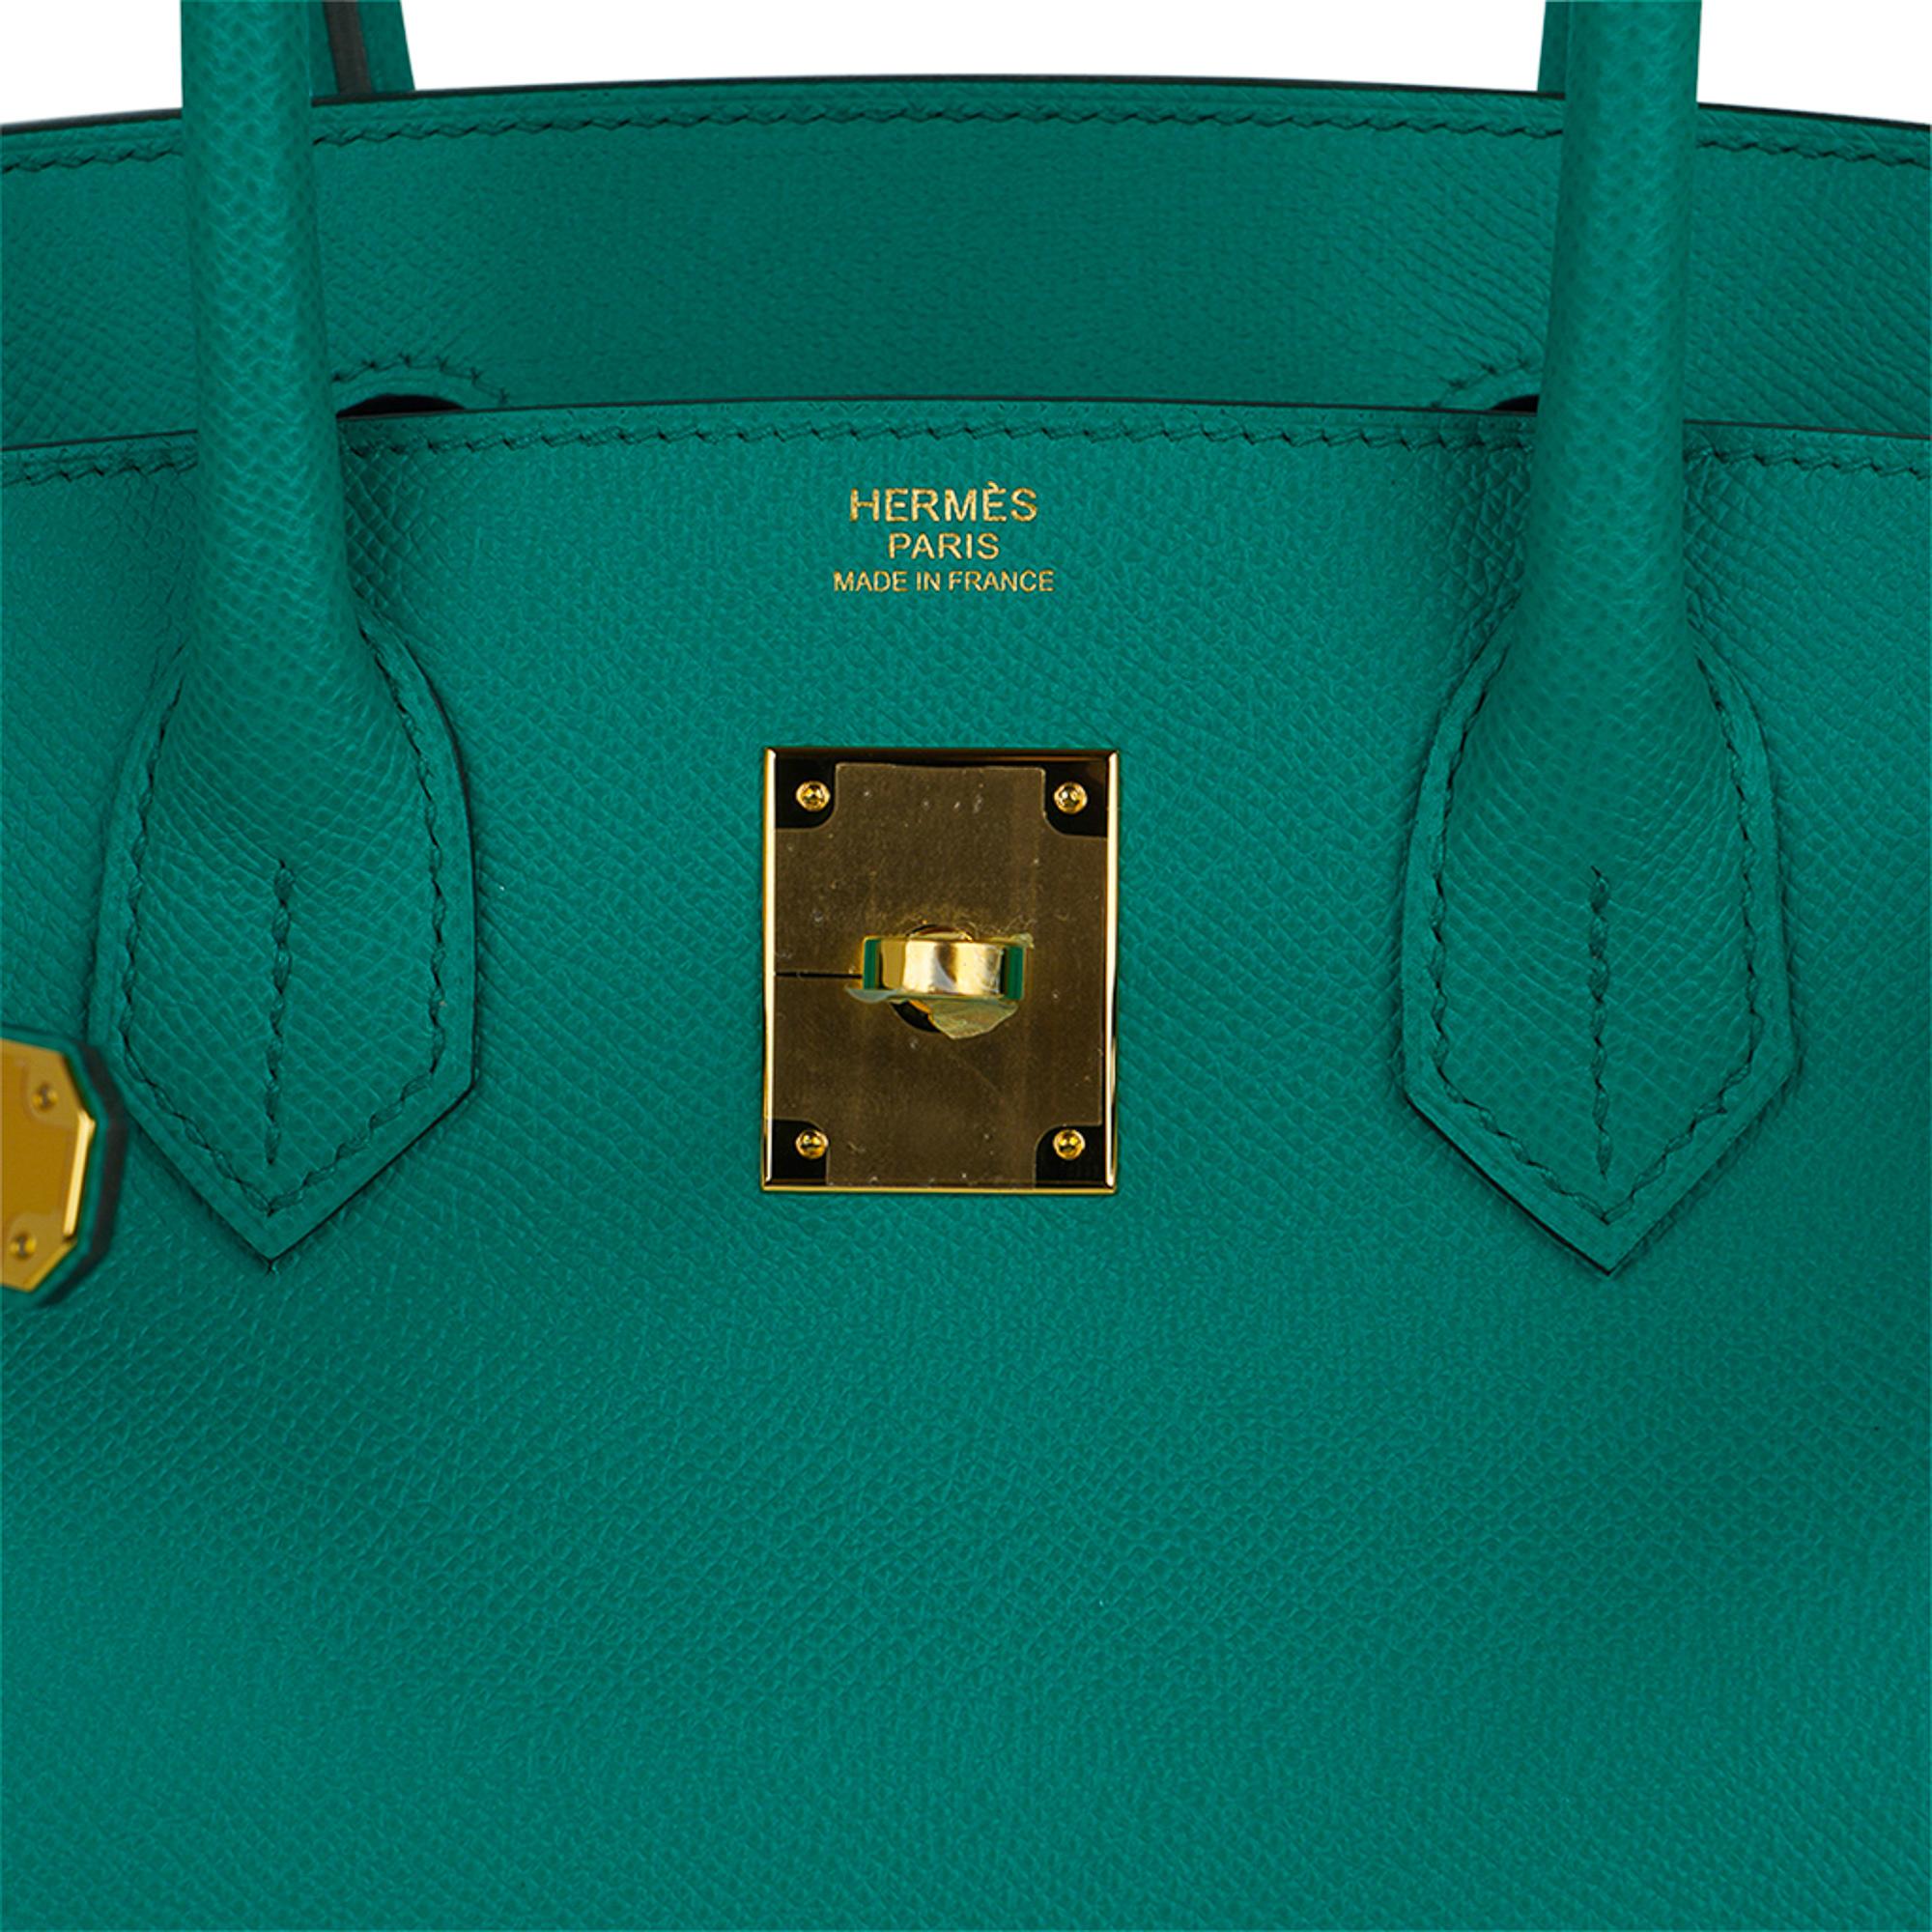 Hermes Birkin 30 Bag Vert Jade Gold Hardware Epsom Leather In New Condition For Sale In Miami, FL